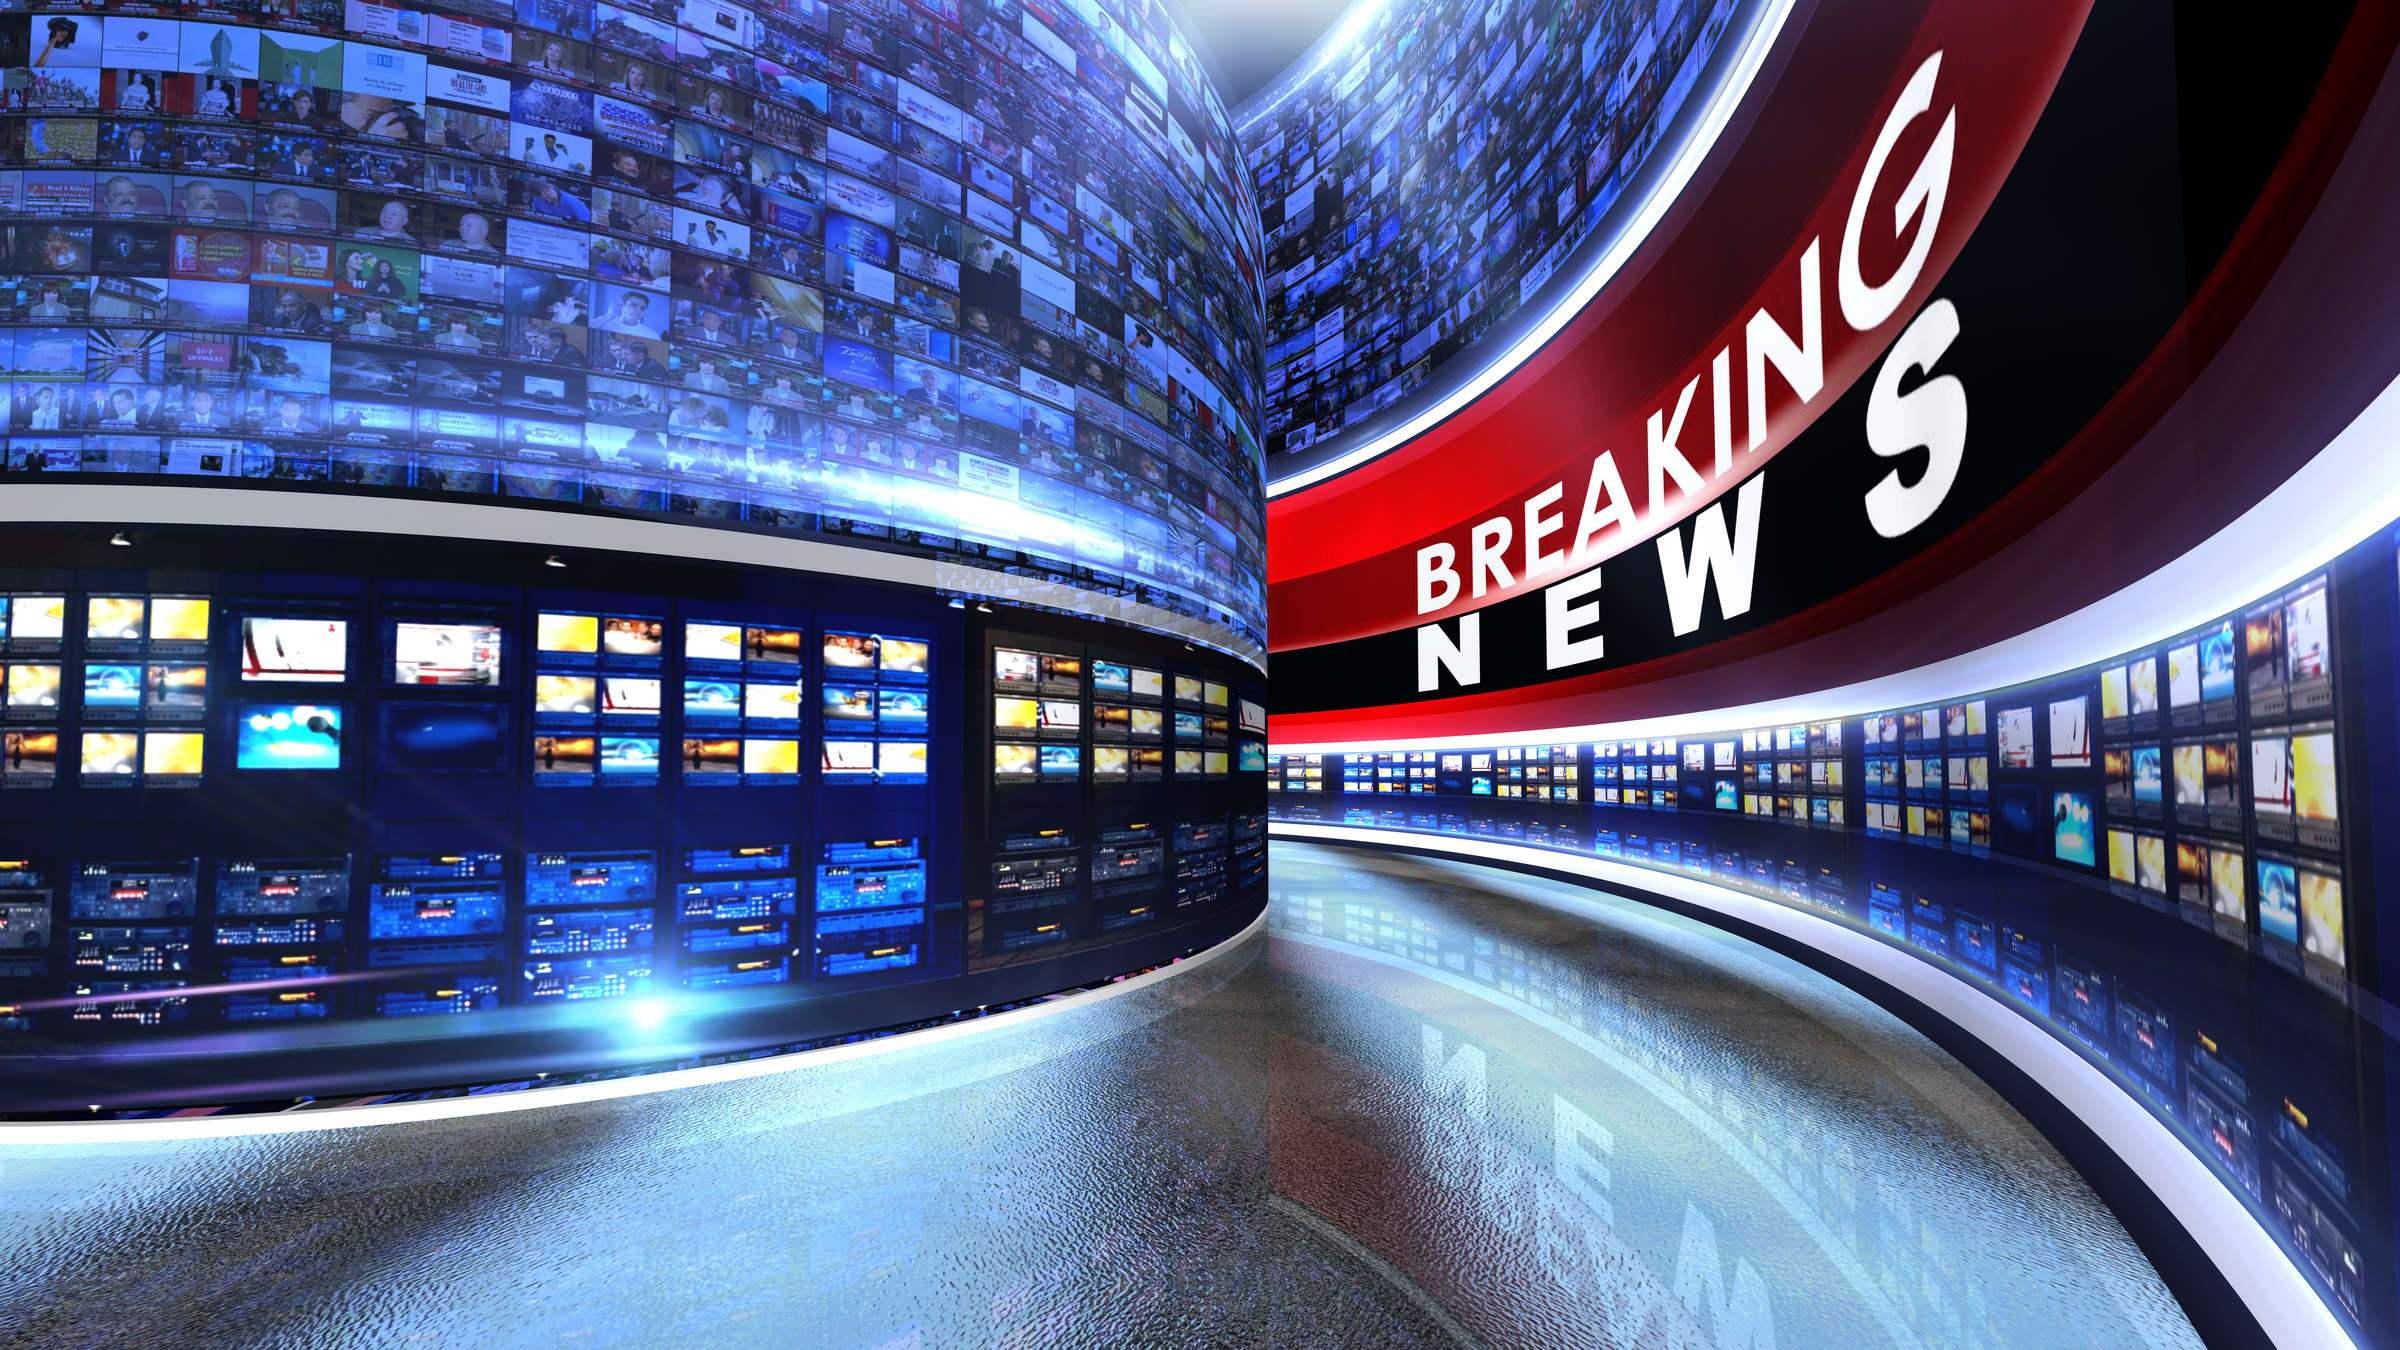 Breaking news 3D rendering Virtual set studio for chroma footage